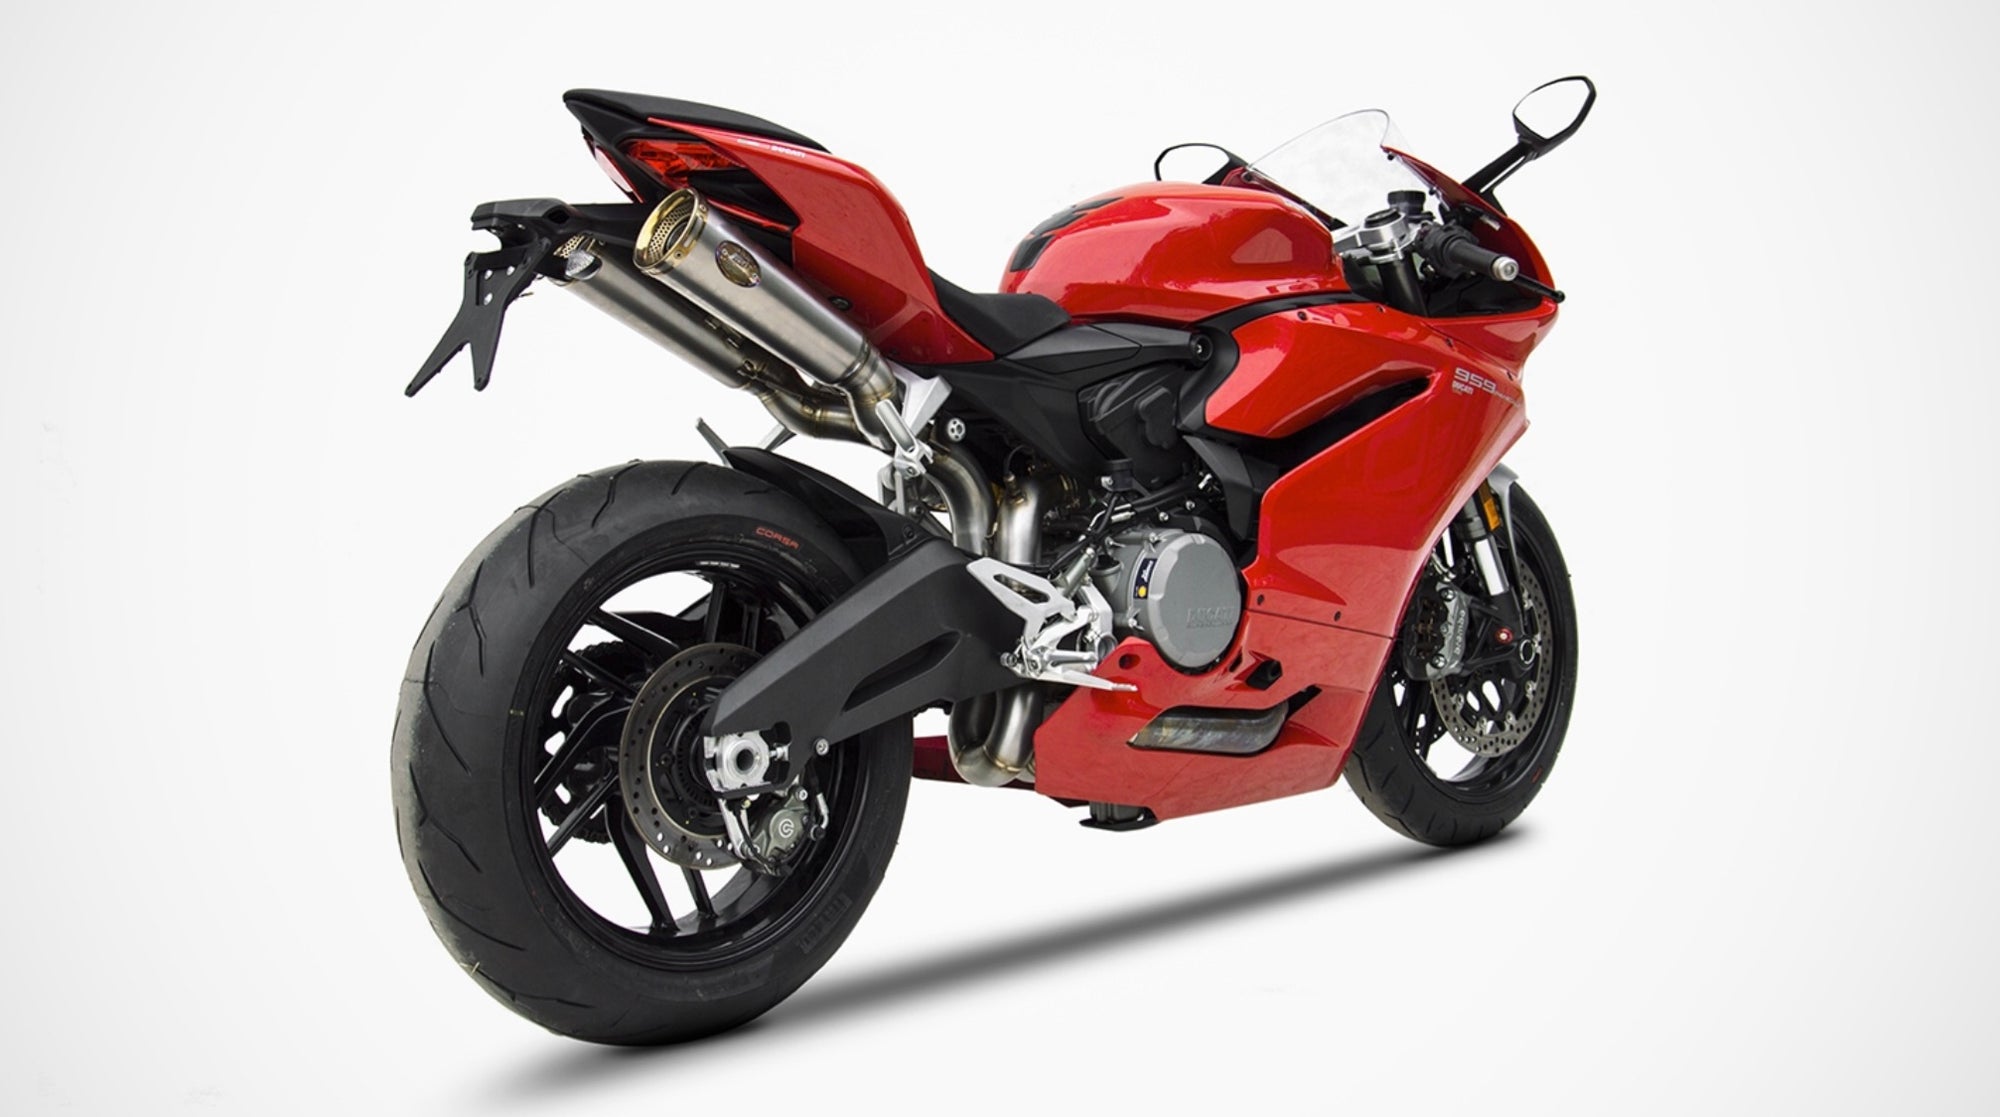 Ducati Panigale 959 - Averys Motorcycles